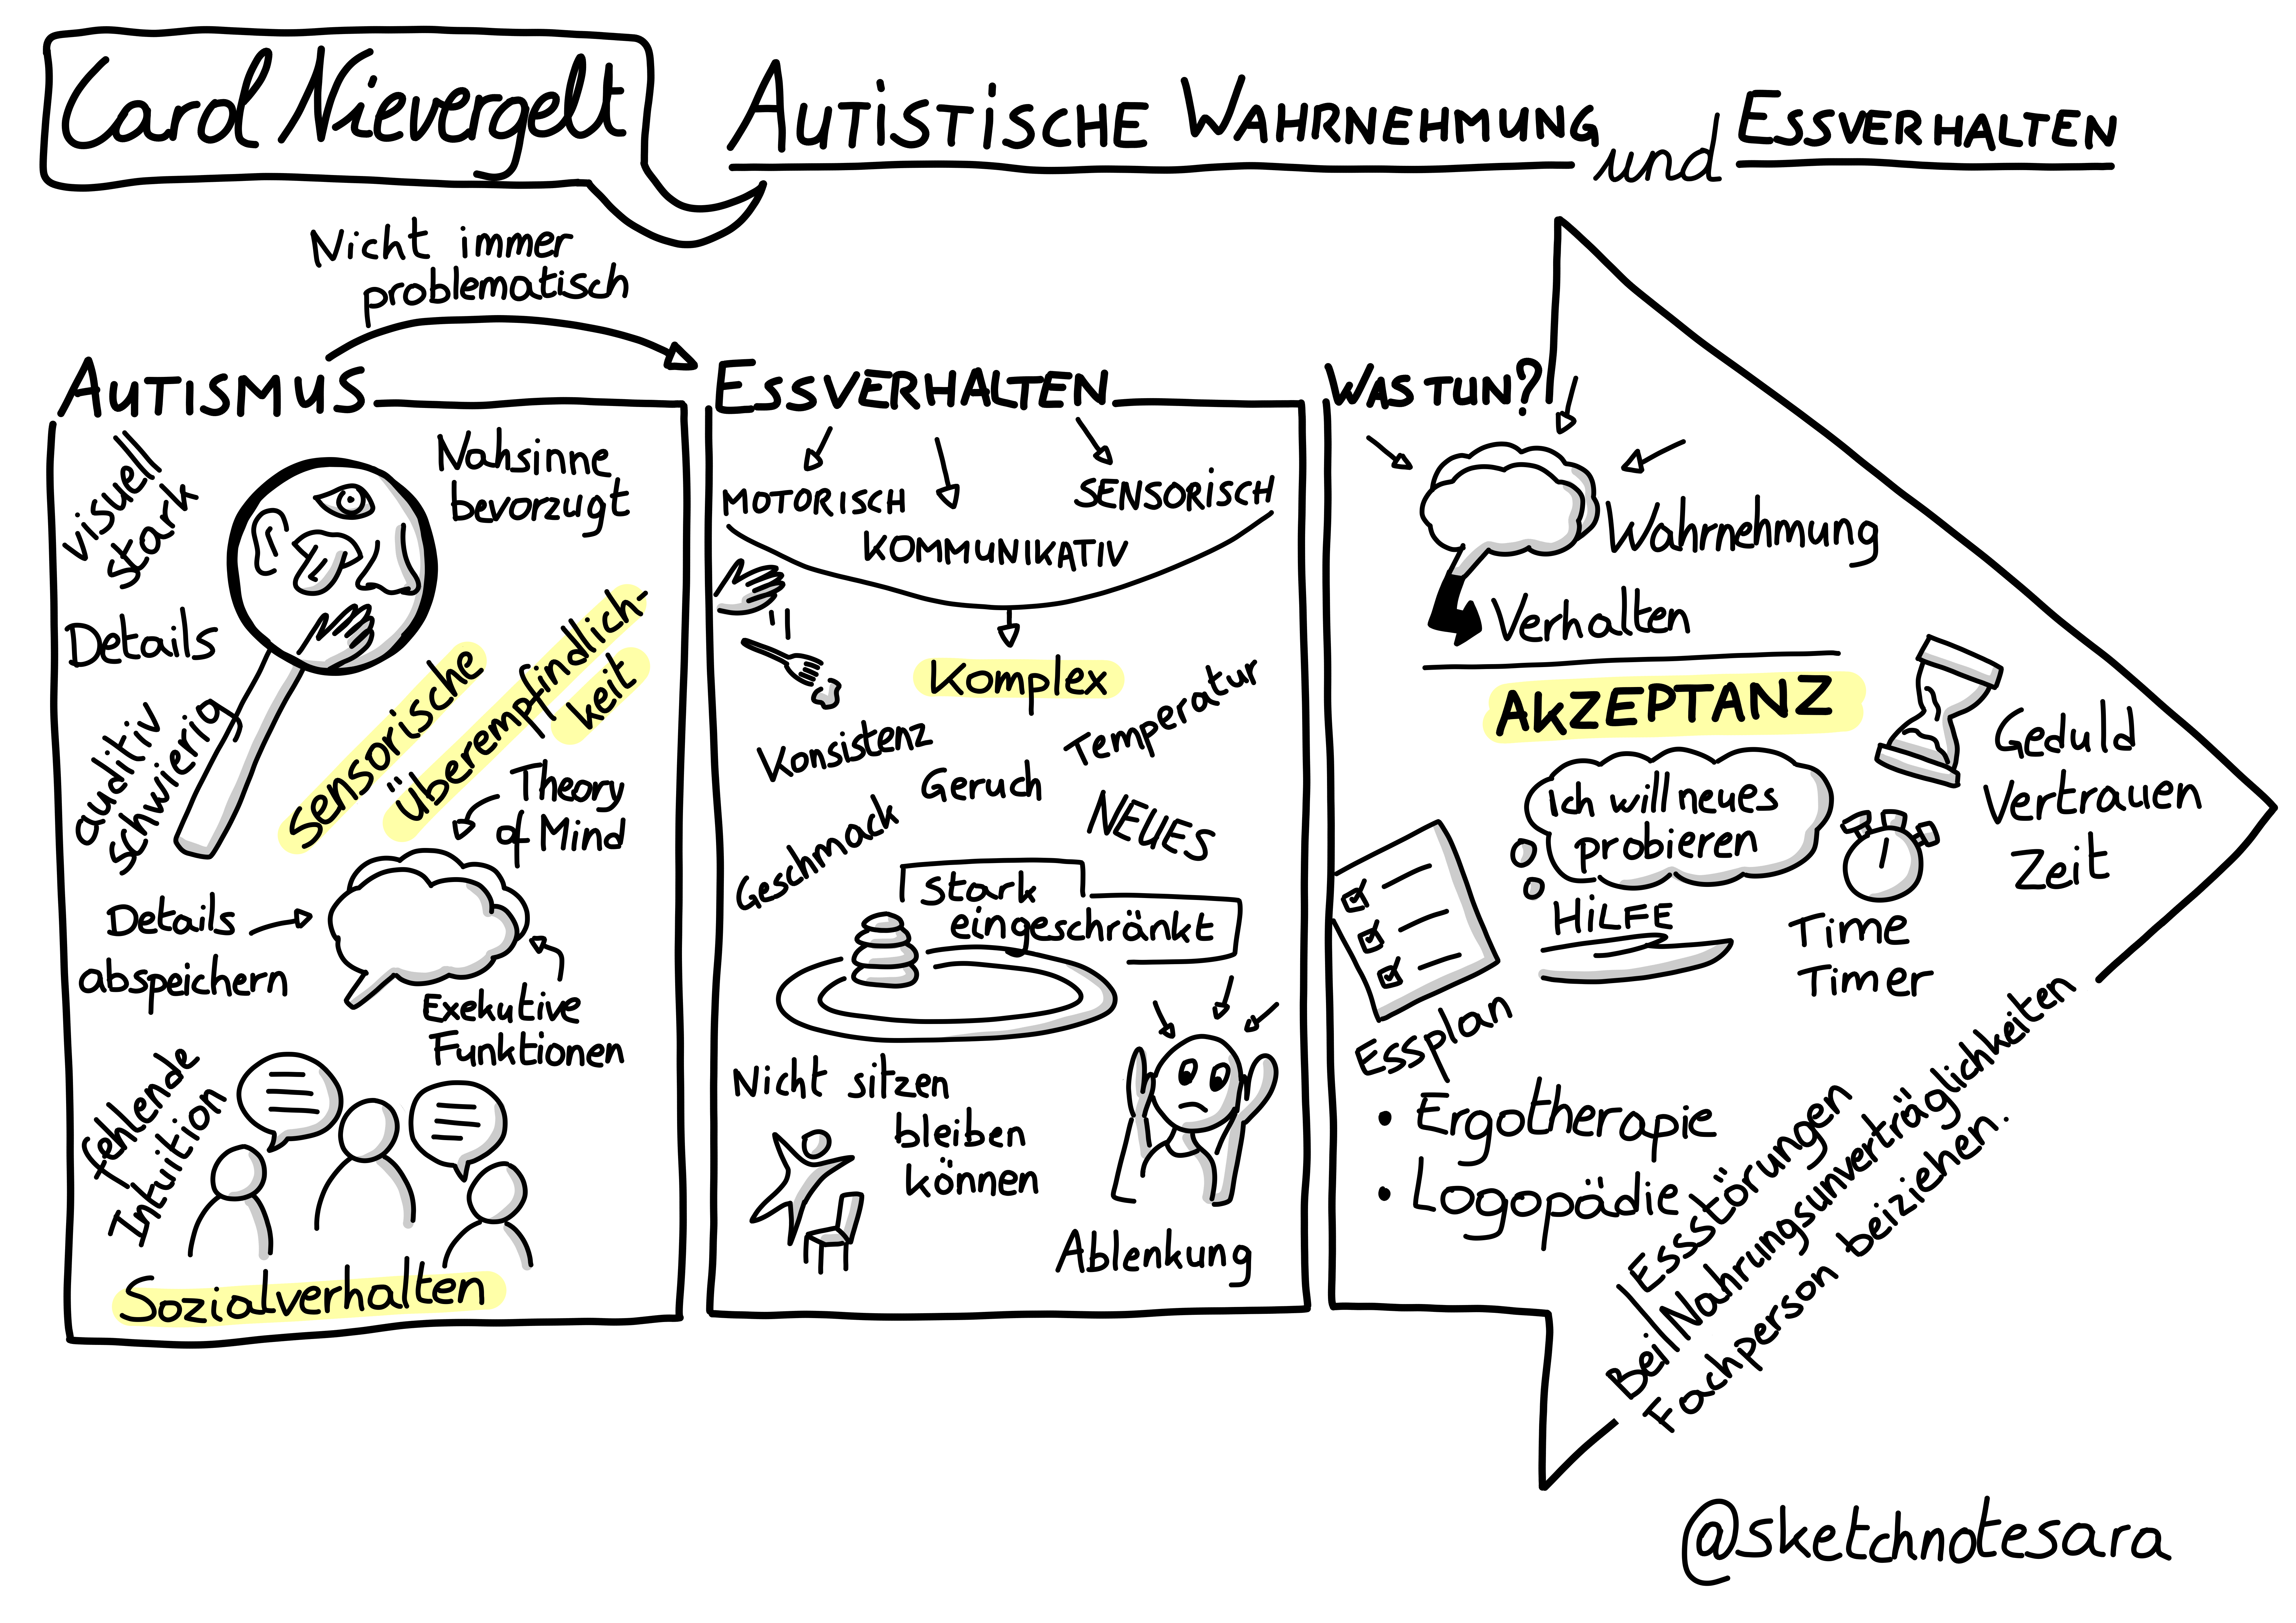 Sketchnote of Live Sketchnotes at Autismusdialog 2022 in Bern